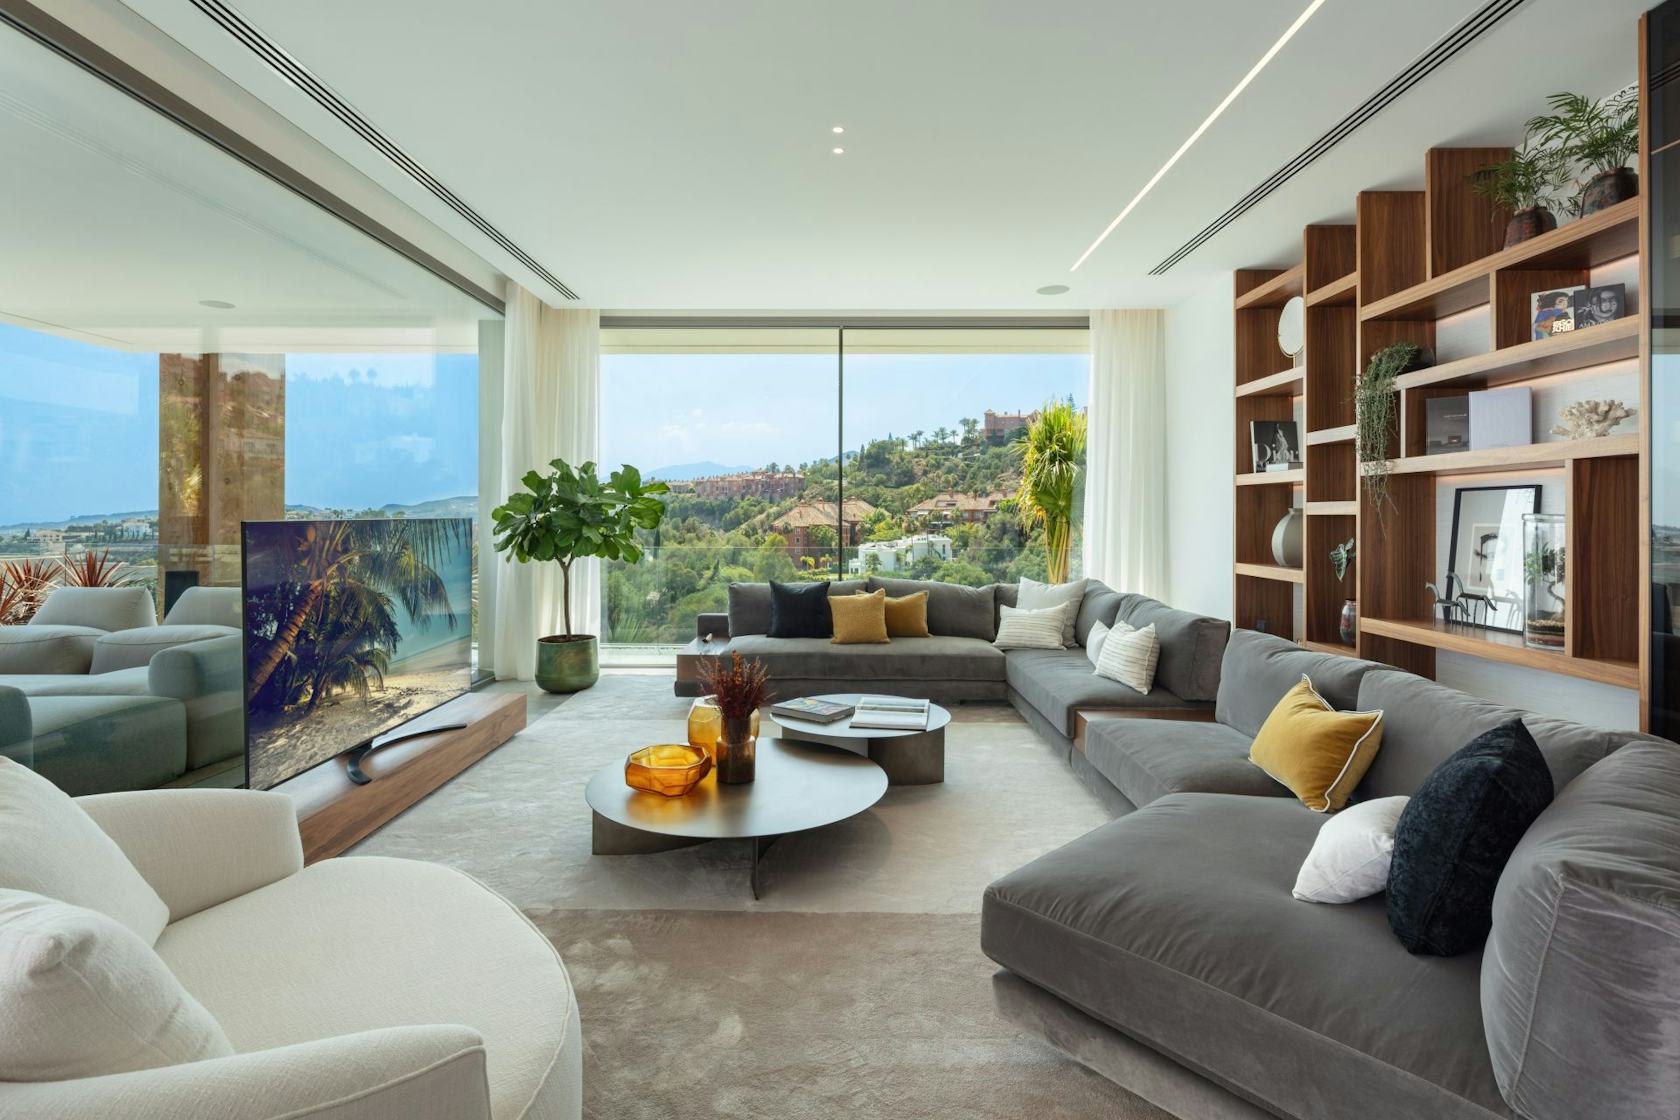 Luxury decor trends: transform your home with elegant design